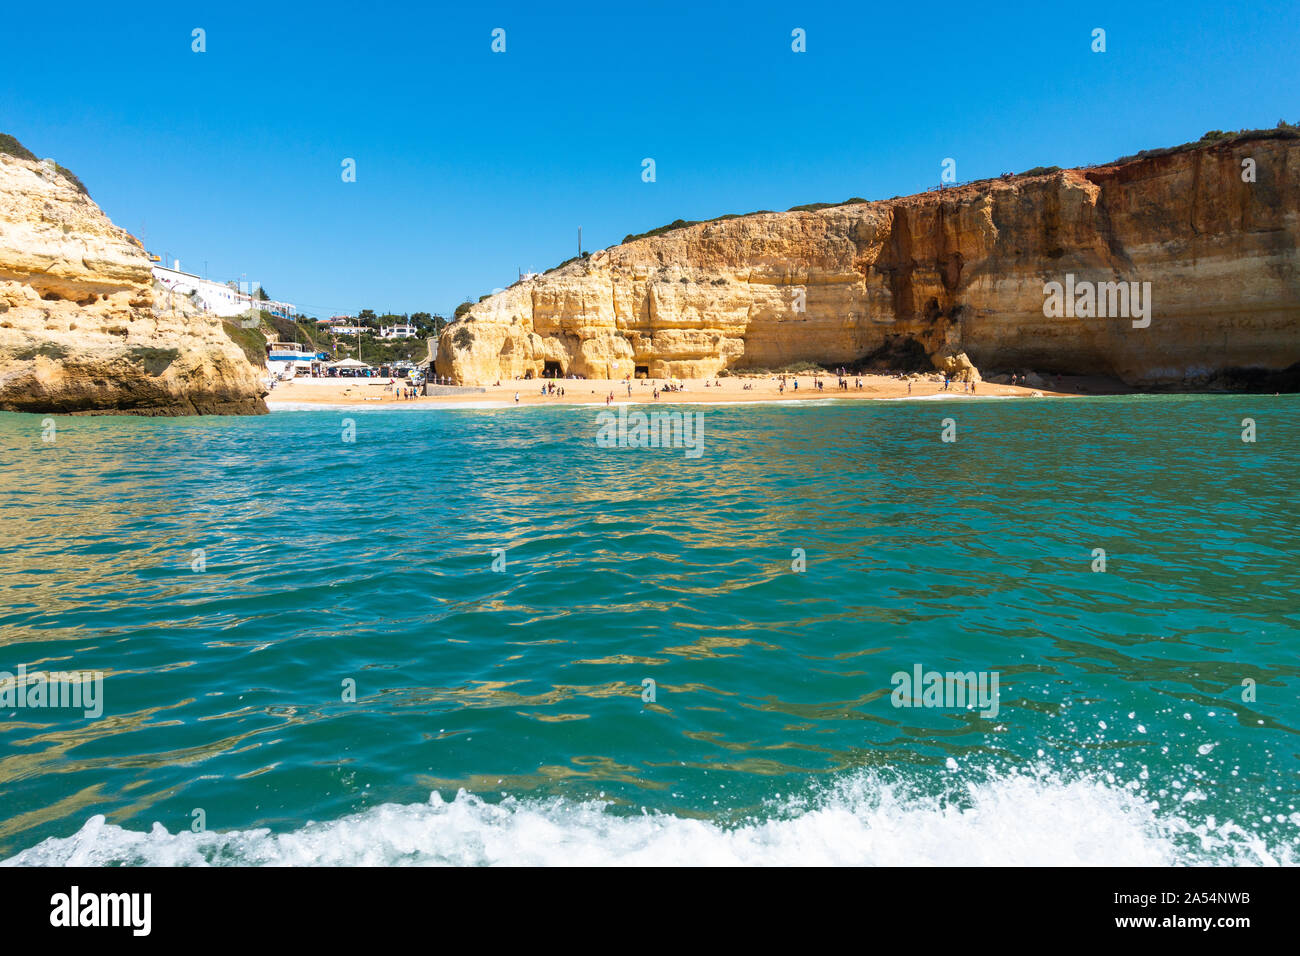 Praia de Benagil viewed from a boat, Lagoa, Algarve, Portugal Stock Photo